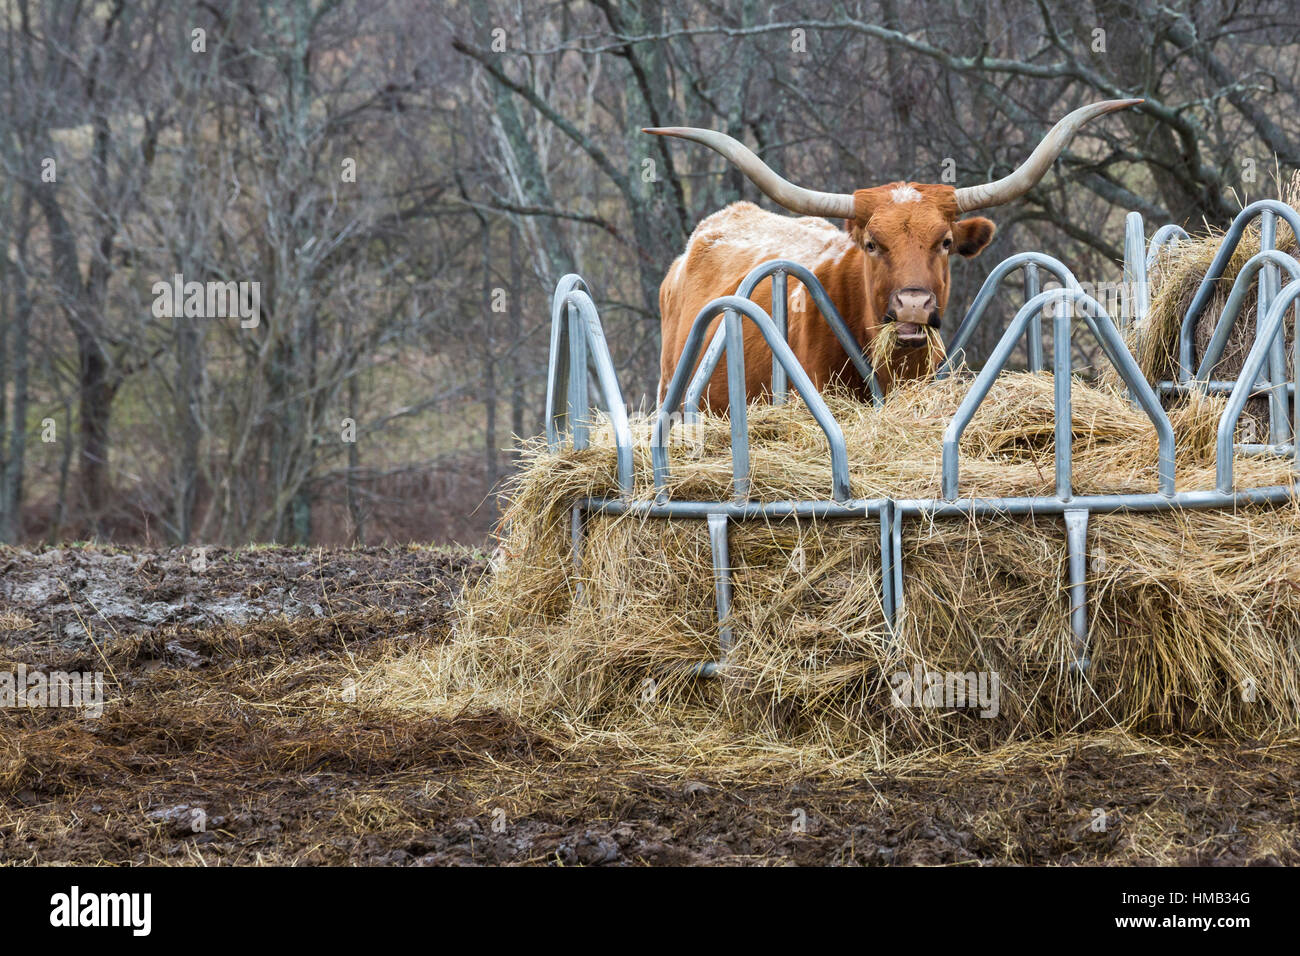 Dry Ridge, Kentucky - une vache Texas Longhorn de manger du foin. Banque D'Images